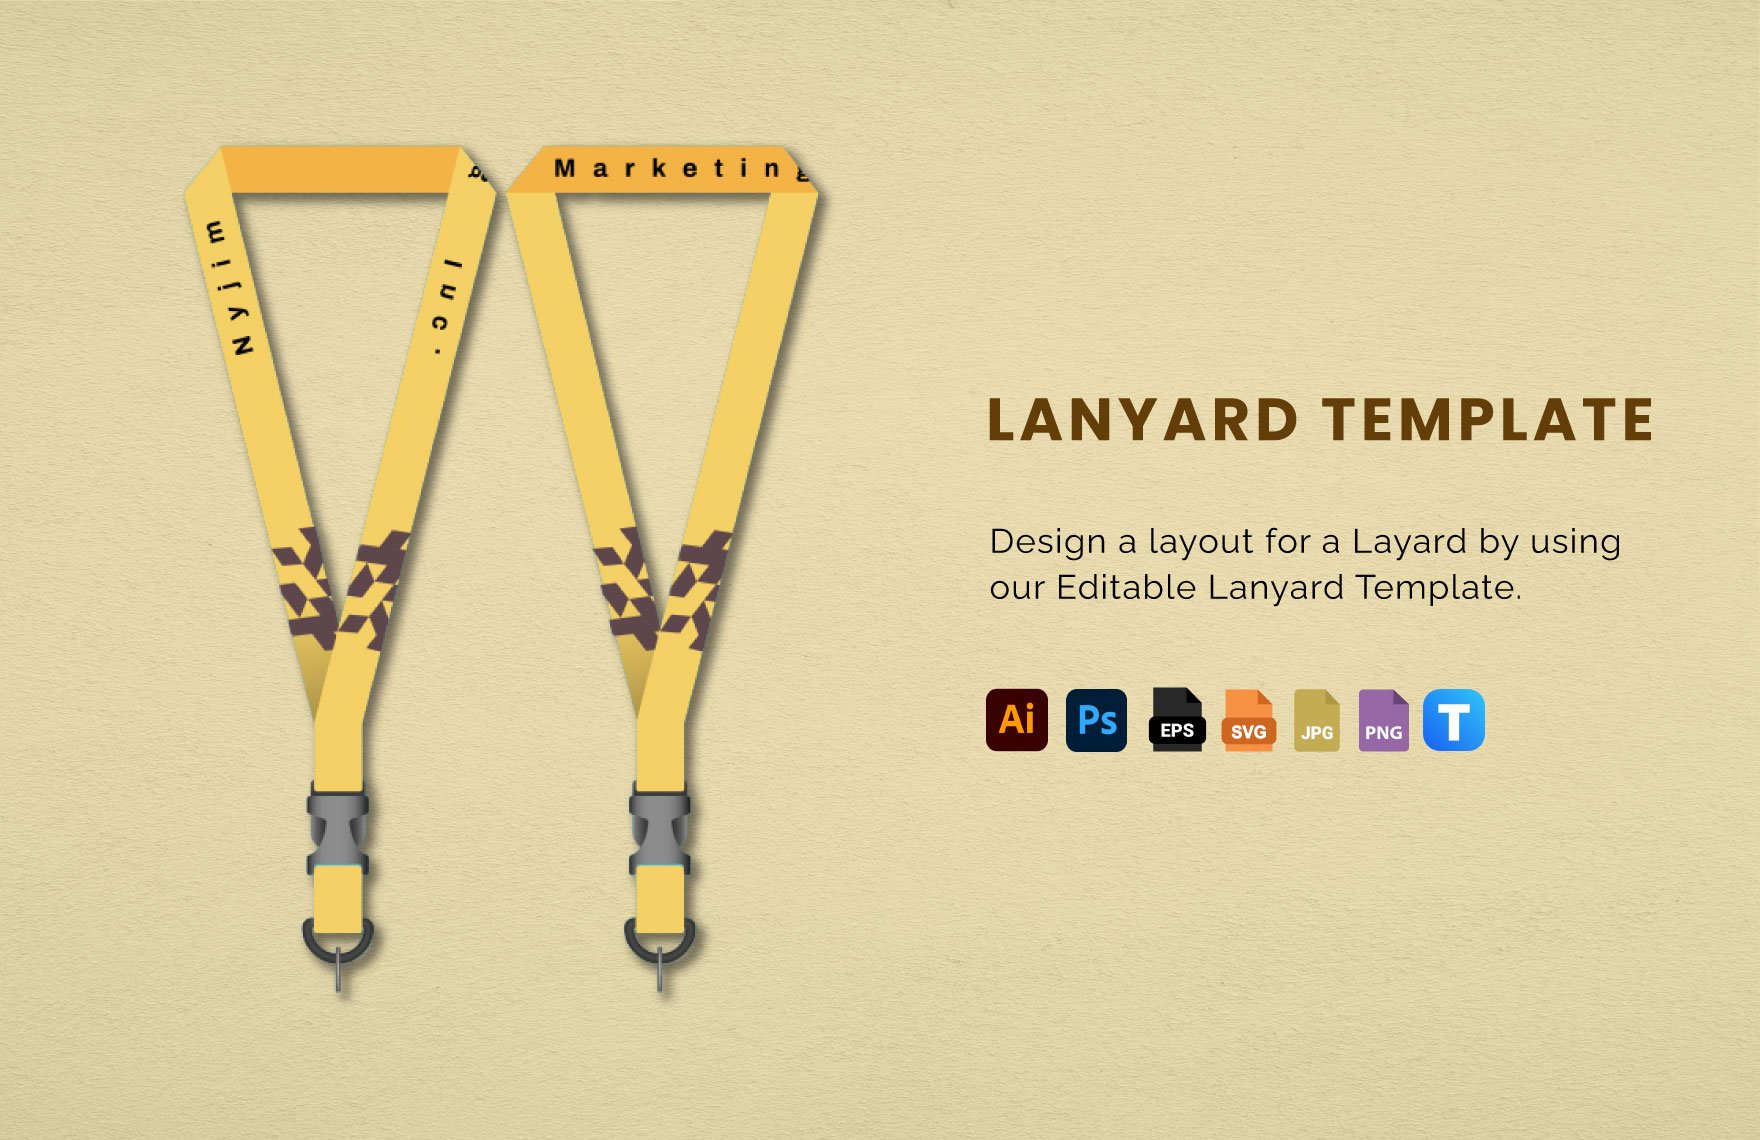 Lanyard Template in Illustrator Photoshop JPG PNG EPS SVG